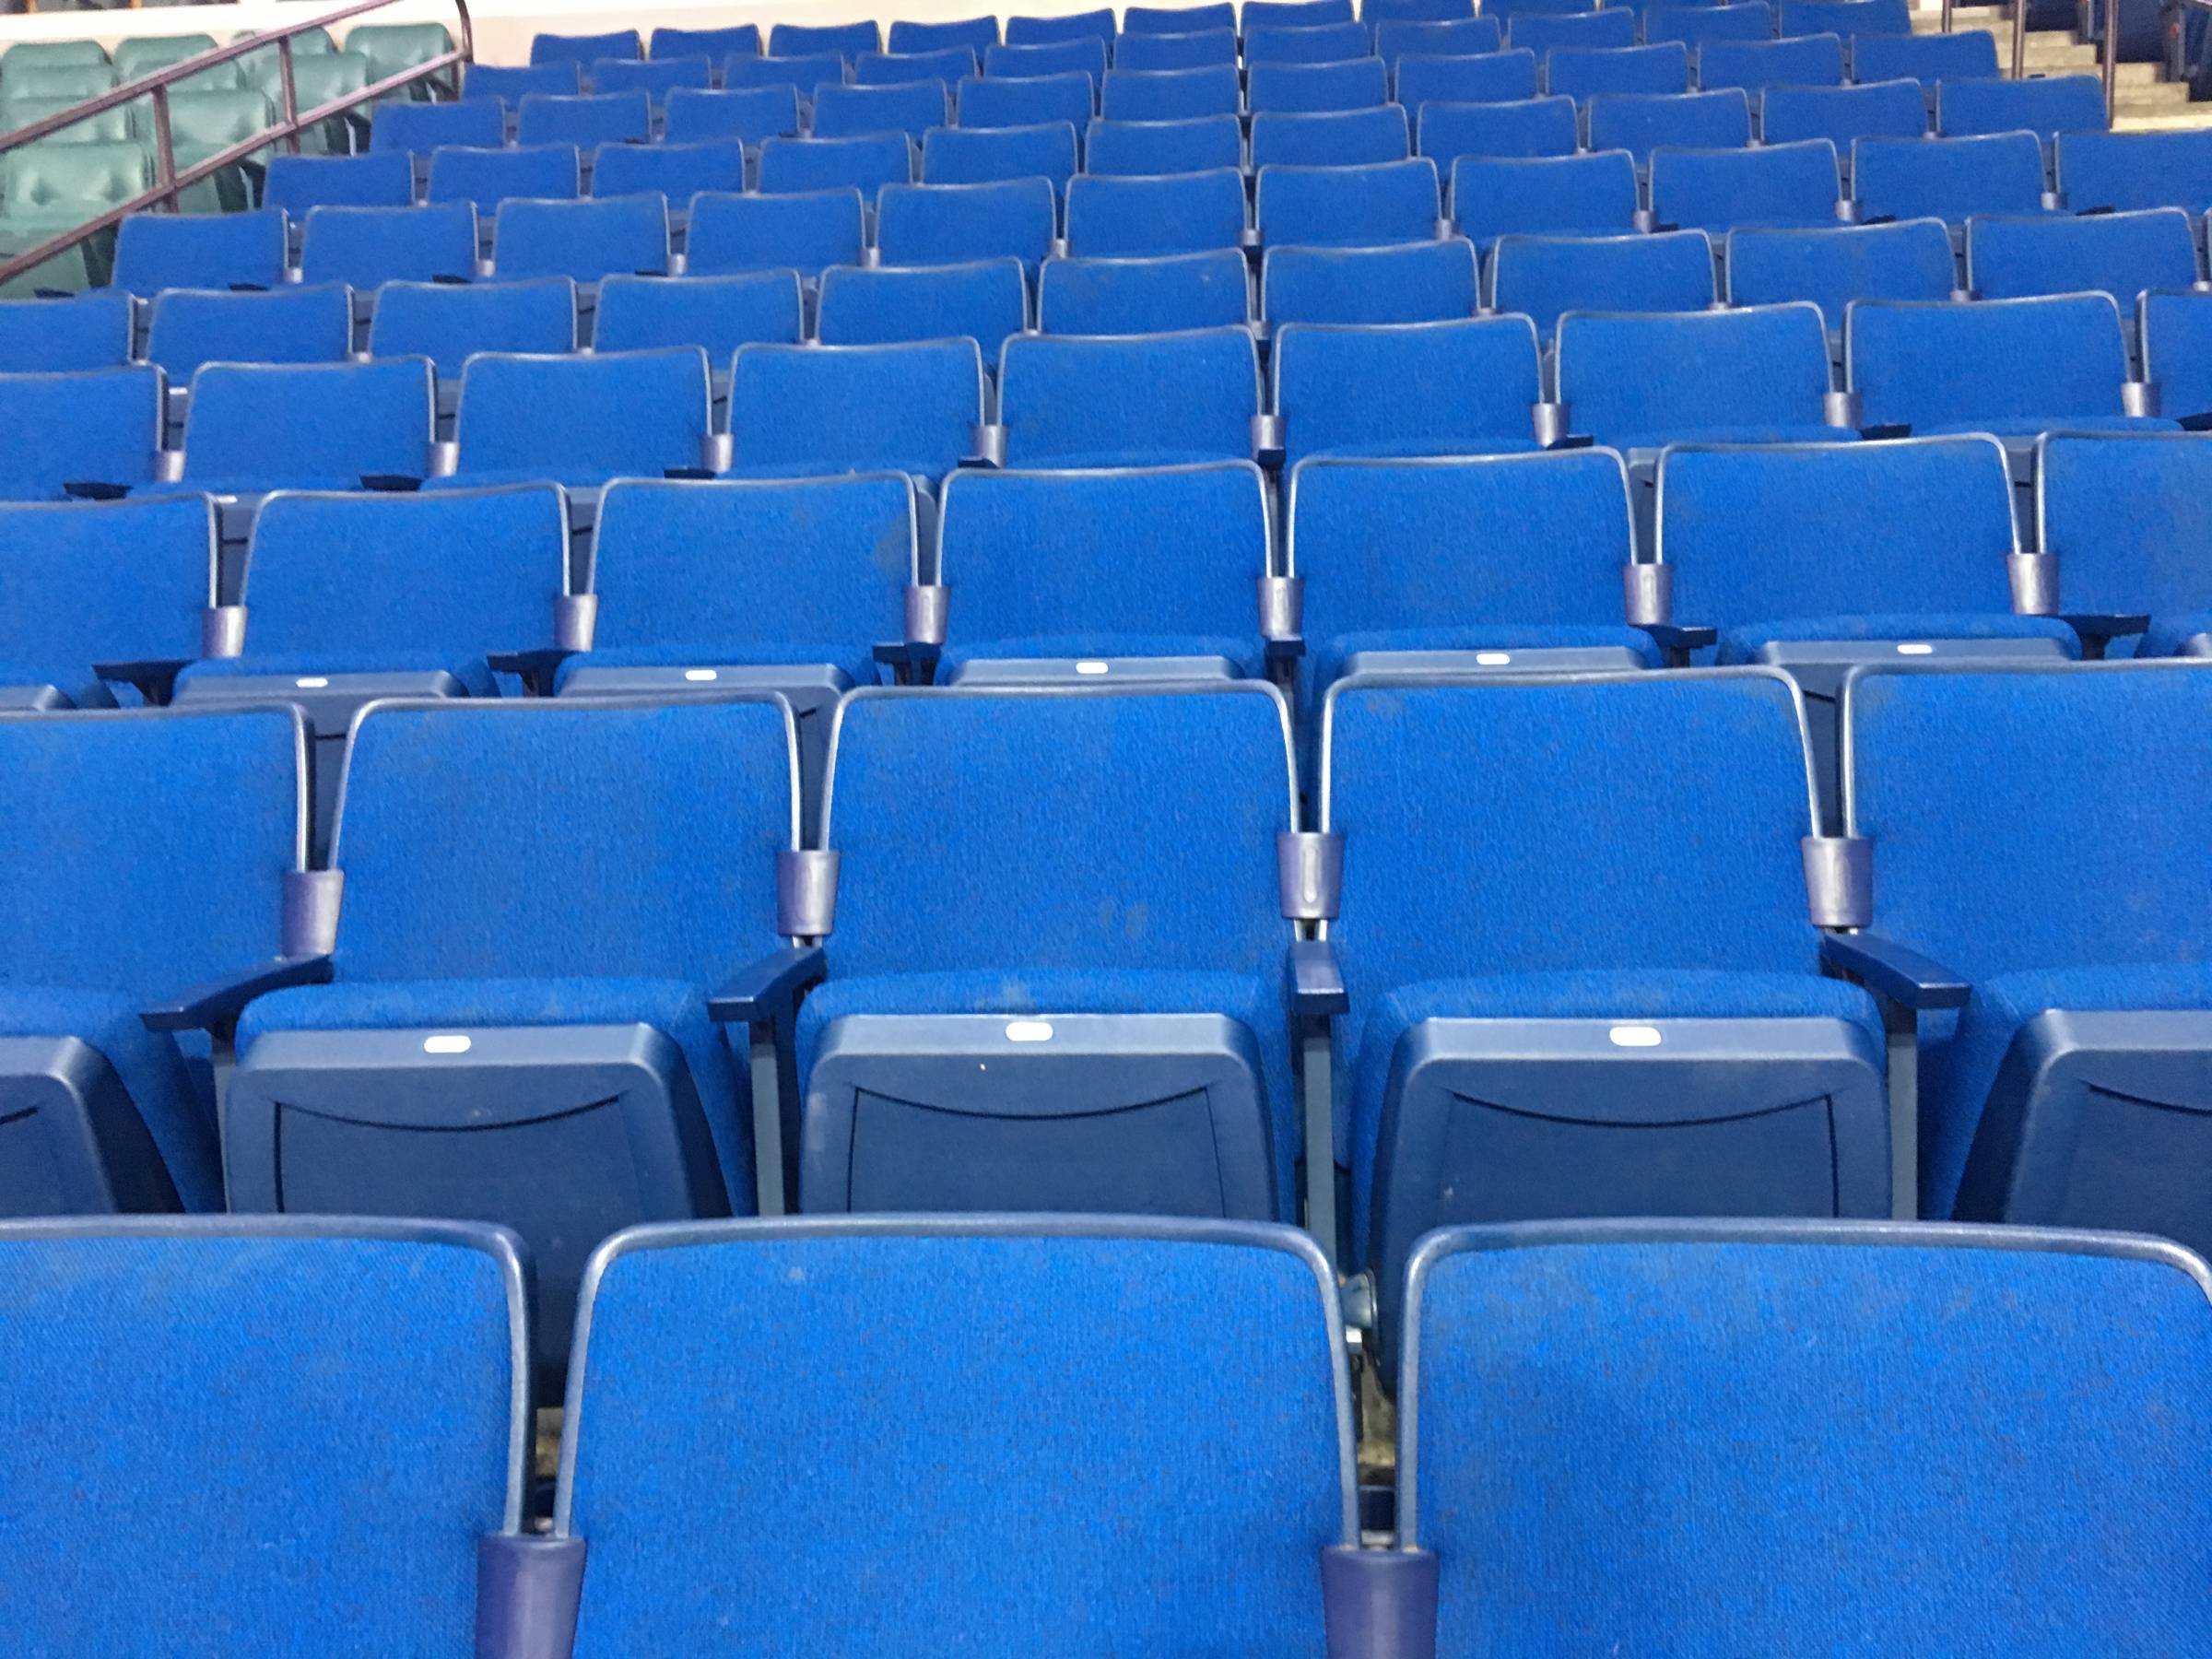 Standard Seats at BOK Center